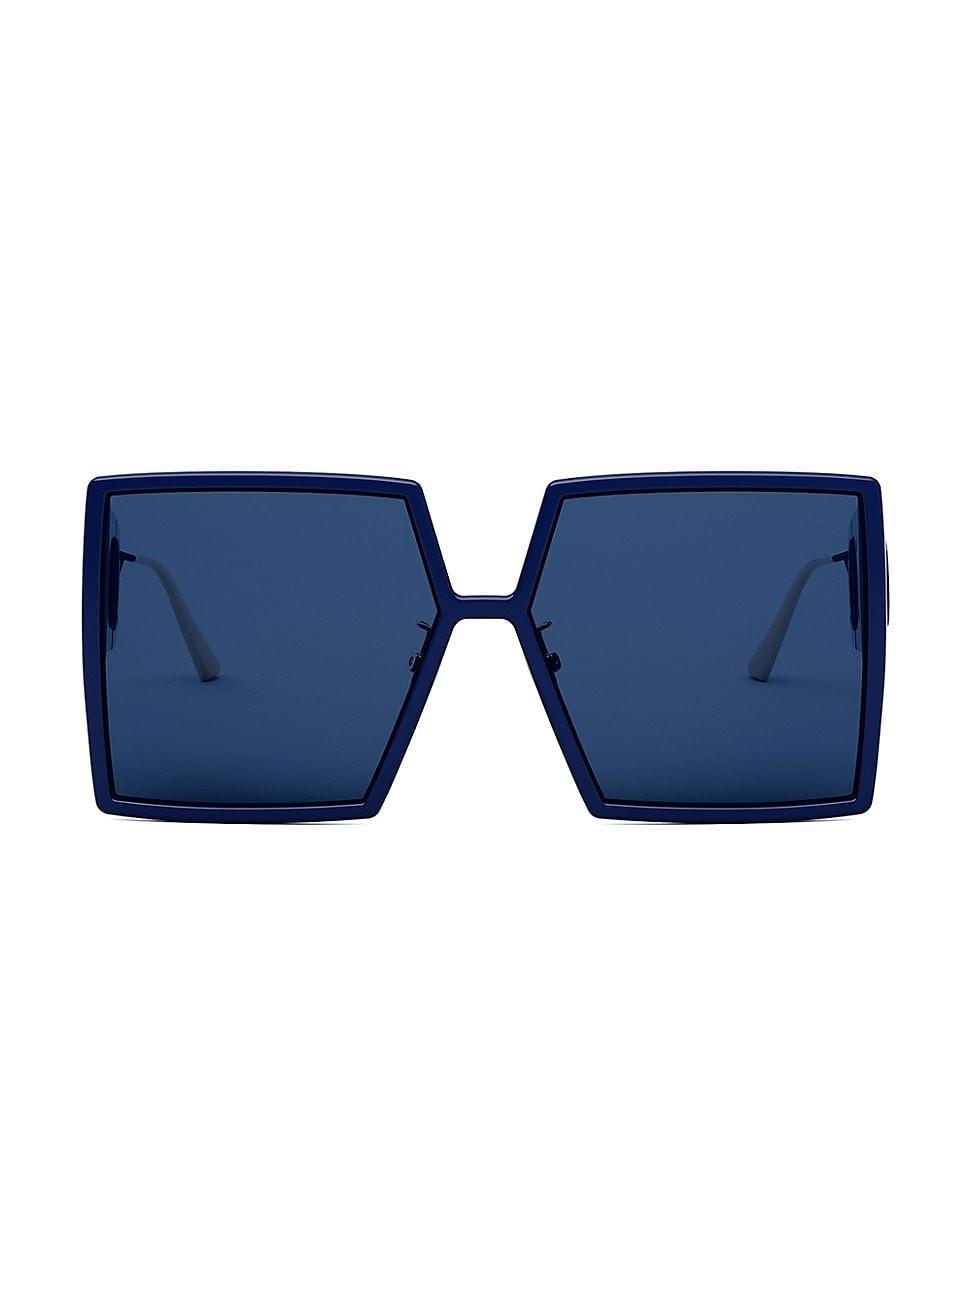 DIOR 30Montaigne SU 58mm Geometric Sunglasses Product Image